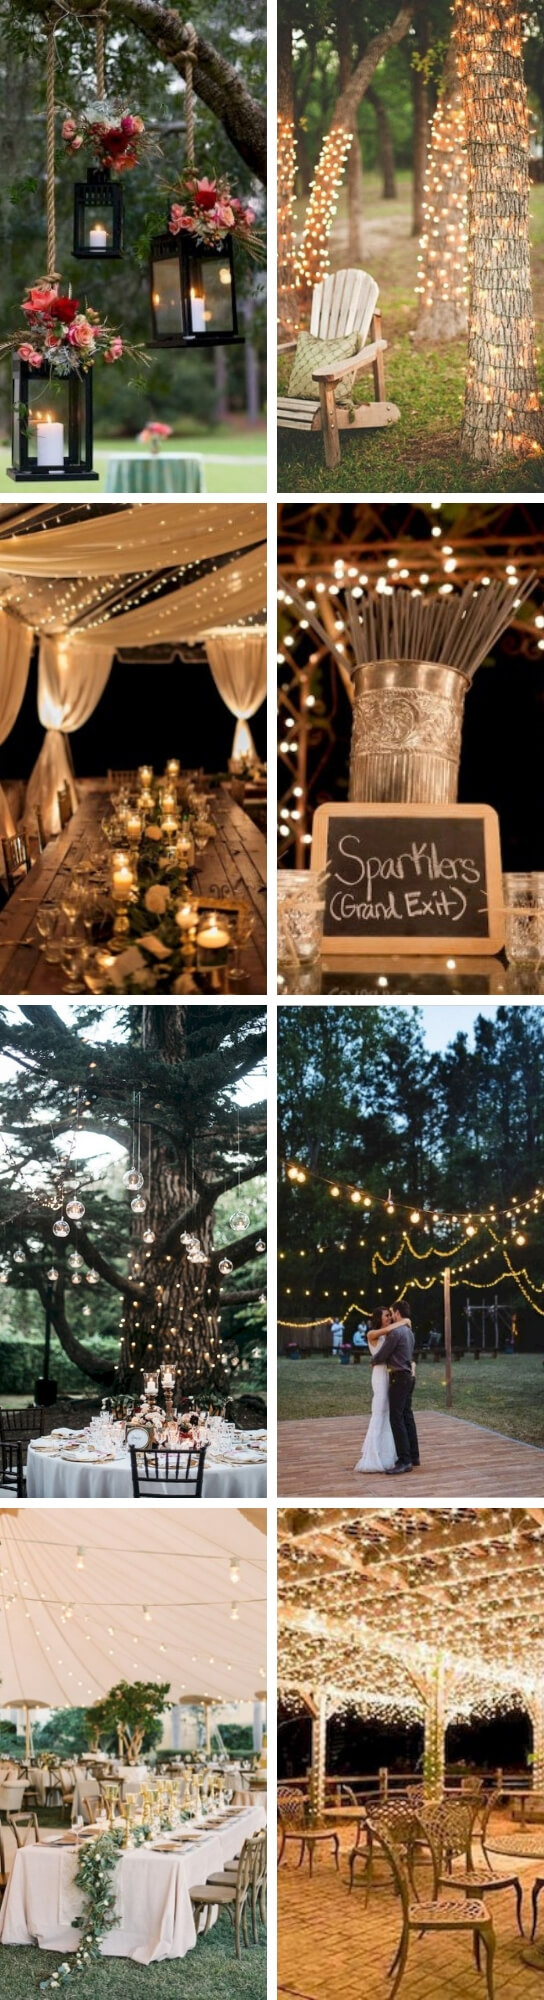 Backyard Wedding Lighting | Creative & Rustic Backyard Wedding Ideas For Summer & Fall